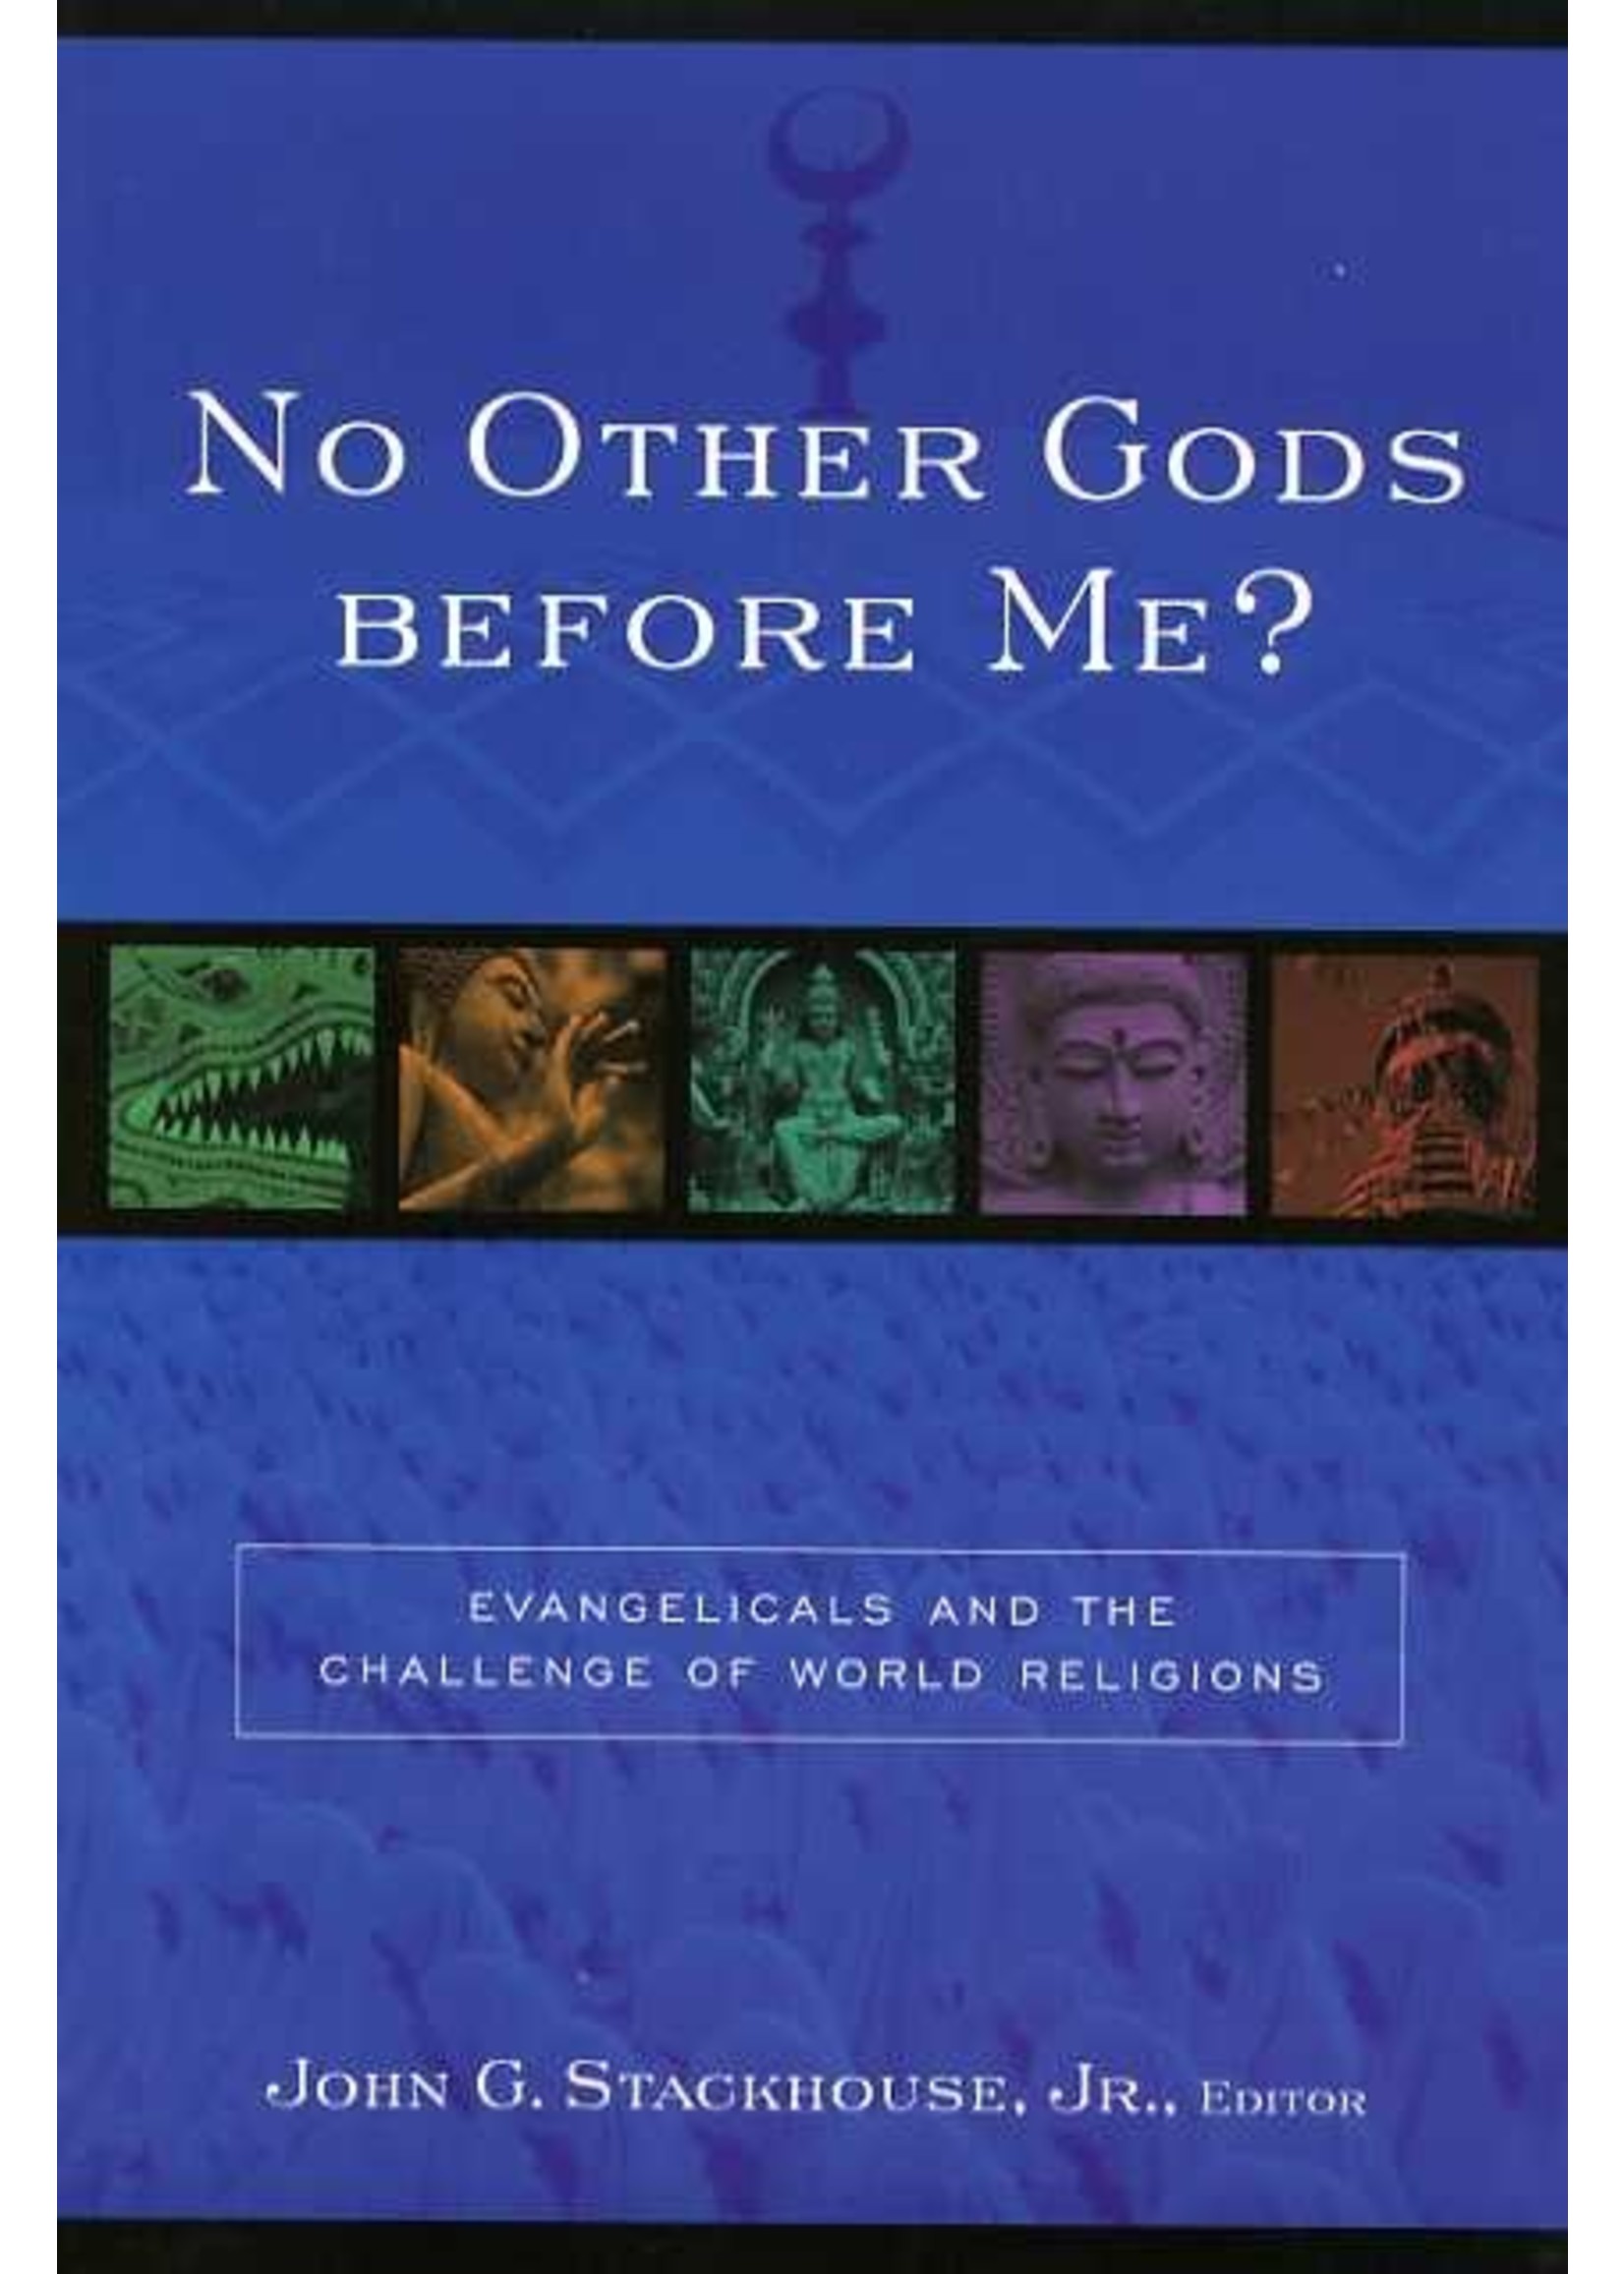 Baker Publishing No Other Gods Before Me - John Stackhouse